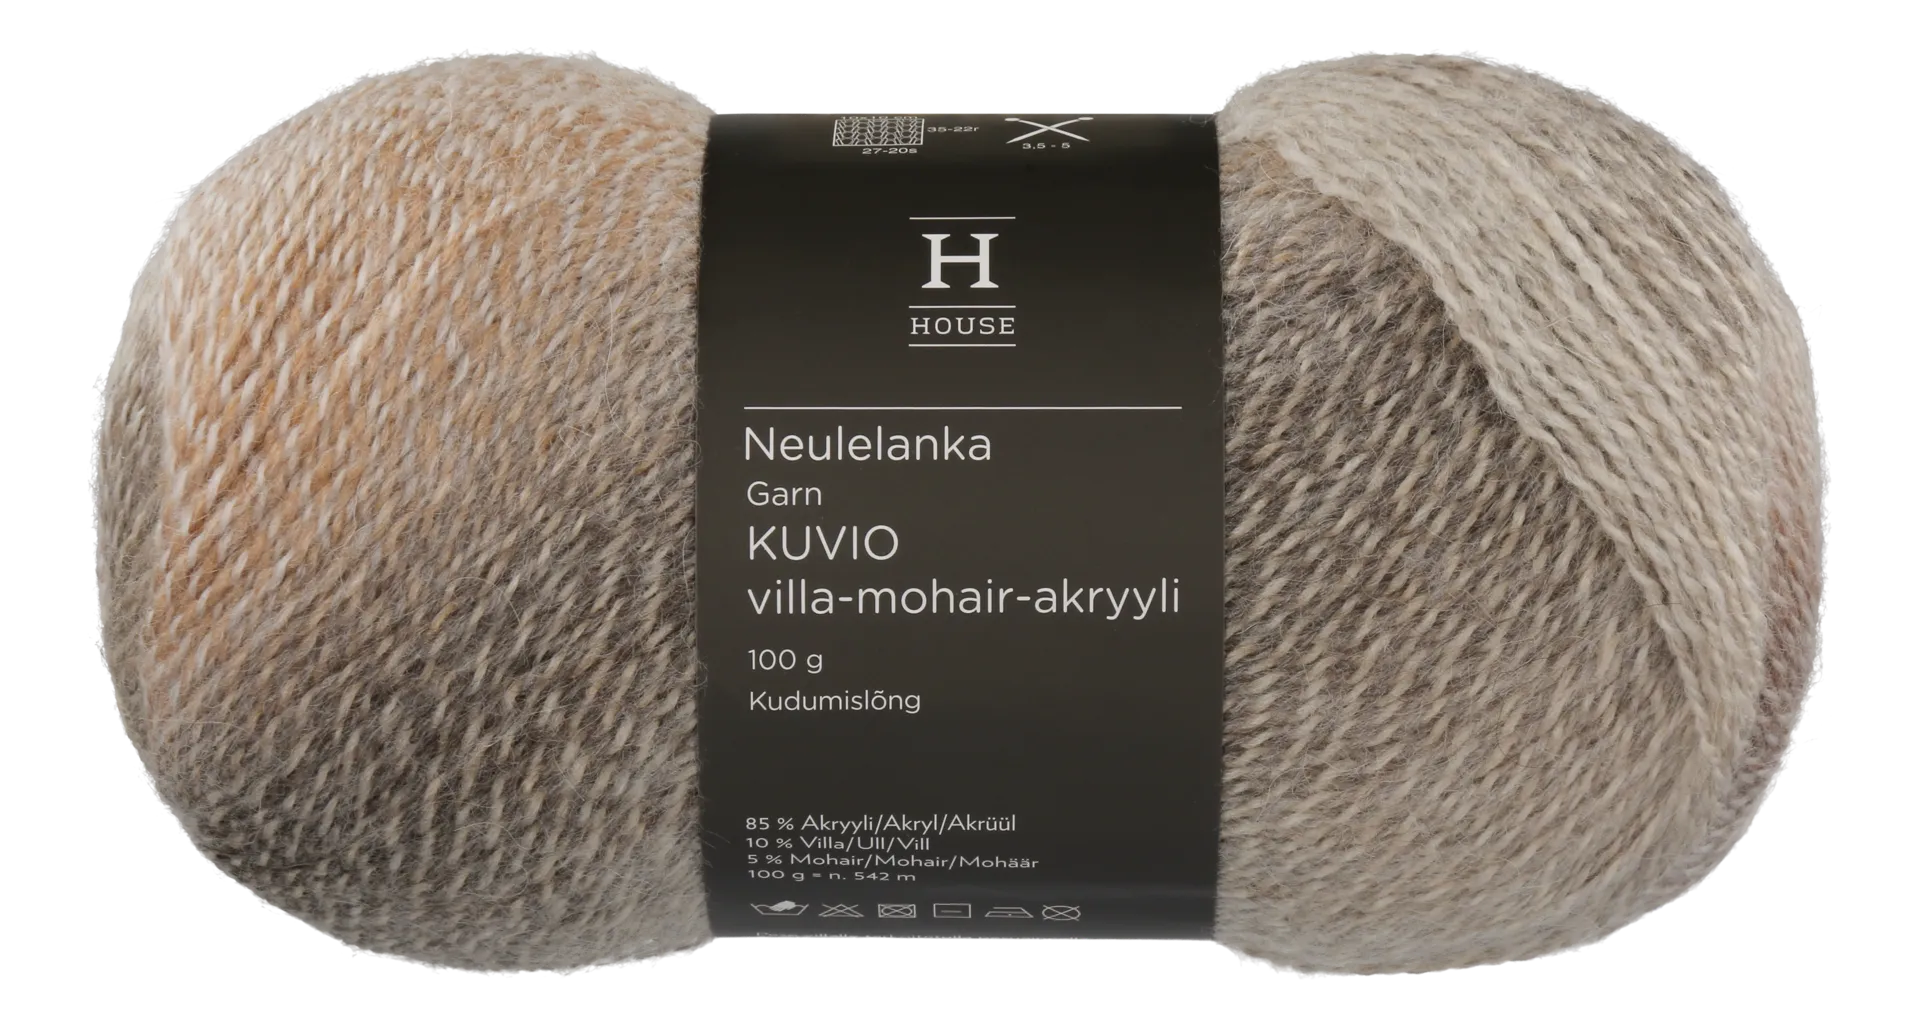 House neulelanka Kuviot villa-mohair-akryyli 100 g Beige/light brown 28087 - 2